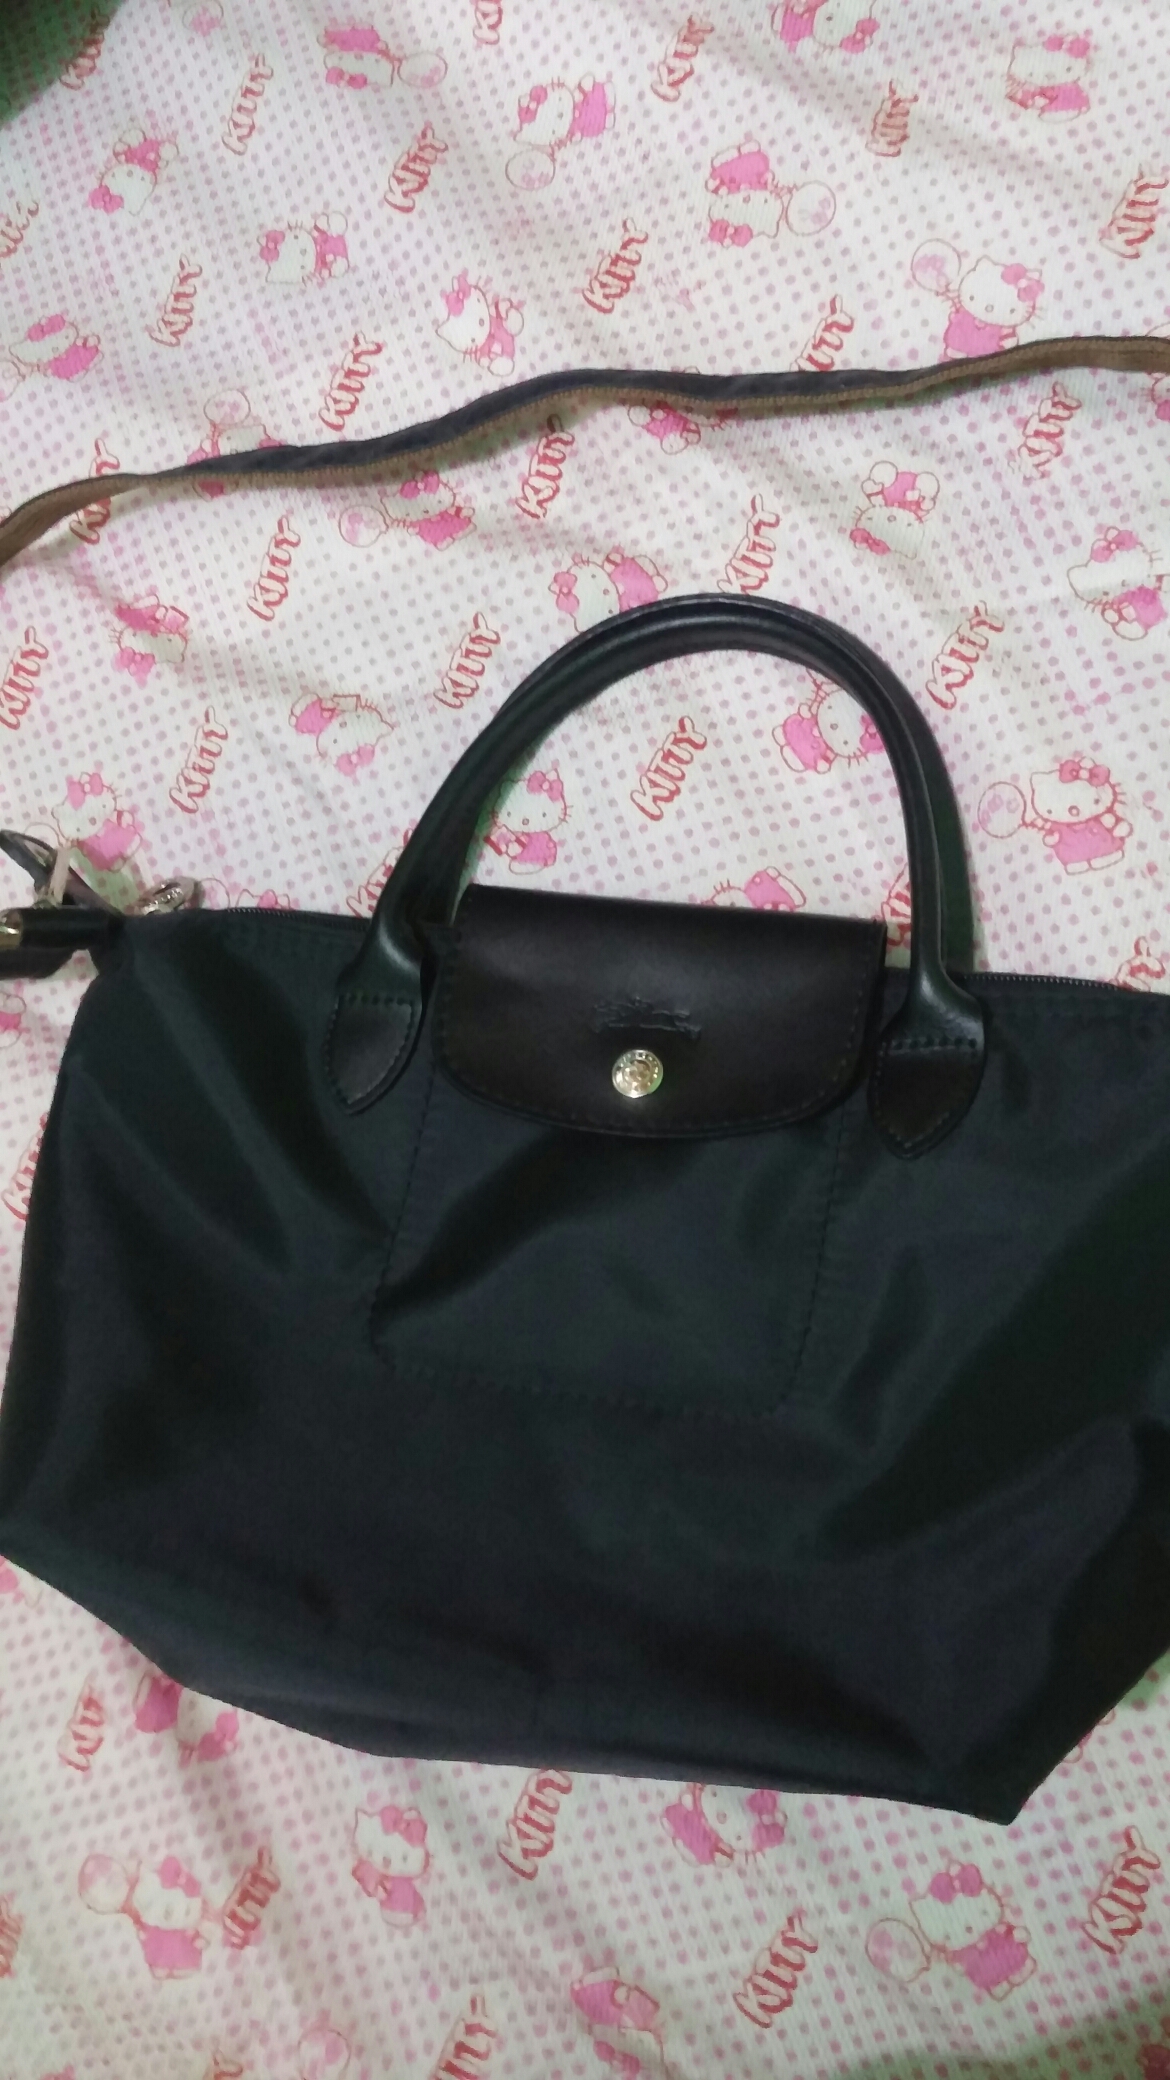 Got a fake longchamp bag in OLX – The 